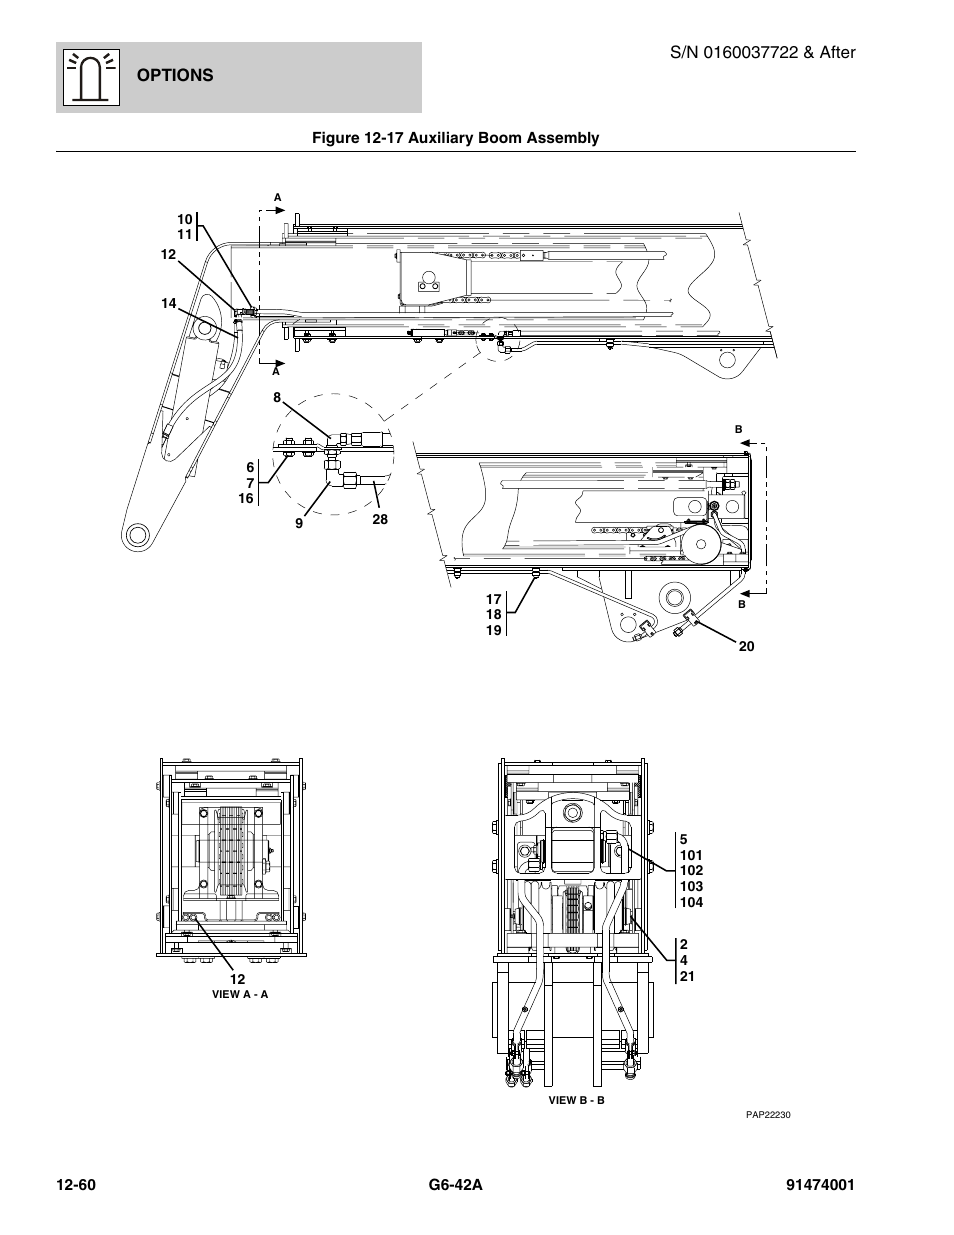 Options | JLG G6-42A Parts Manual User Manual | Page 704 / 826